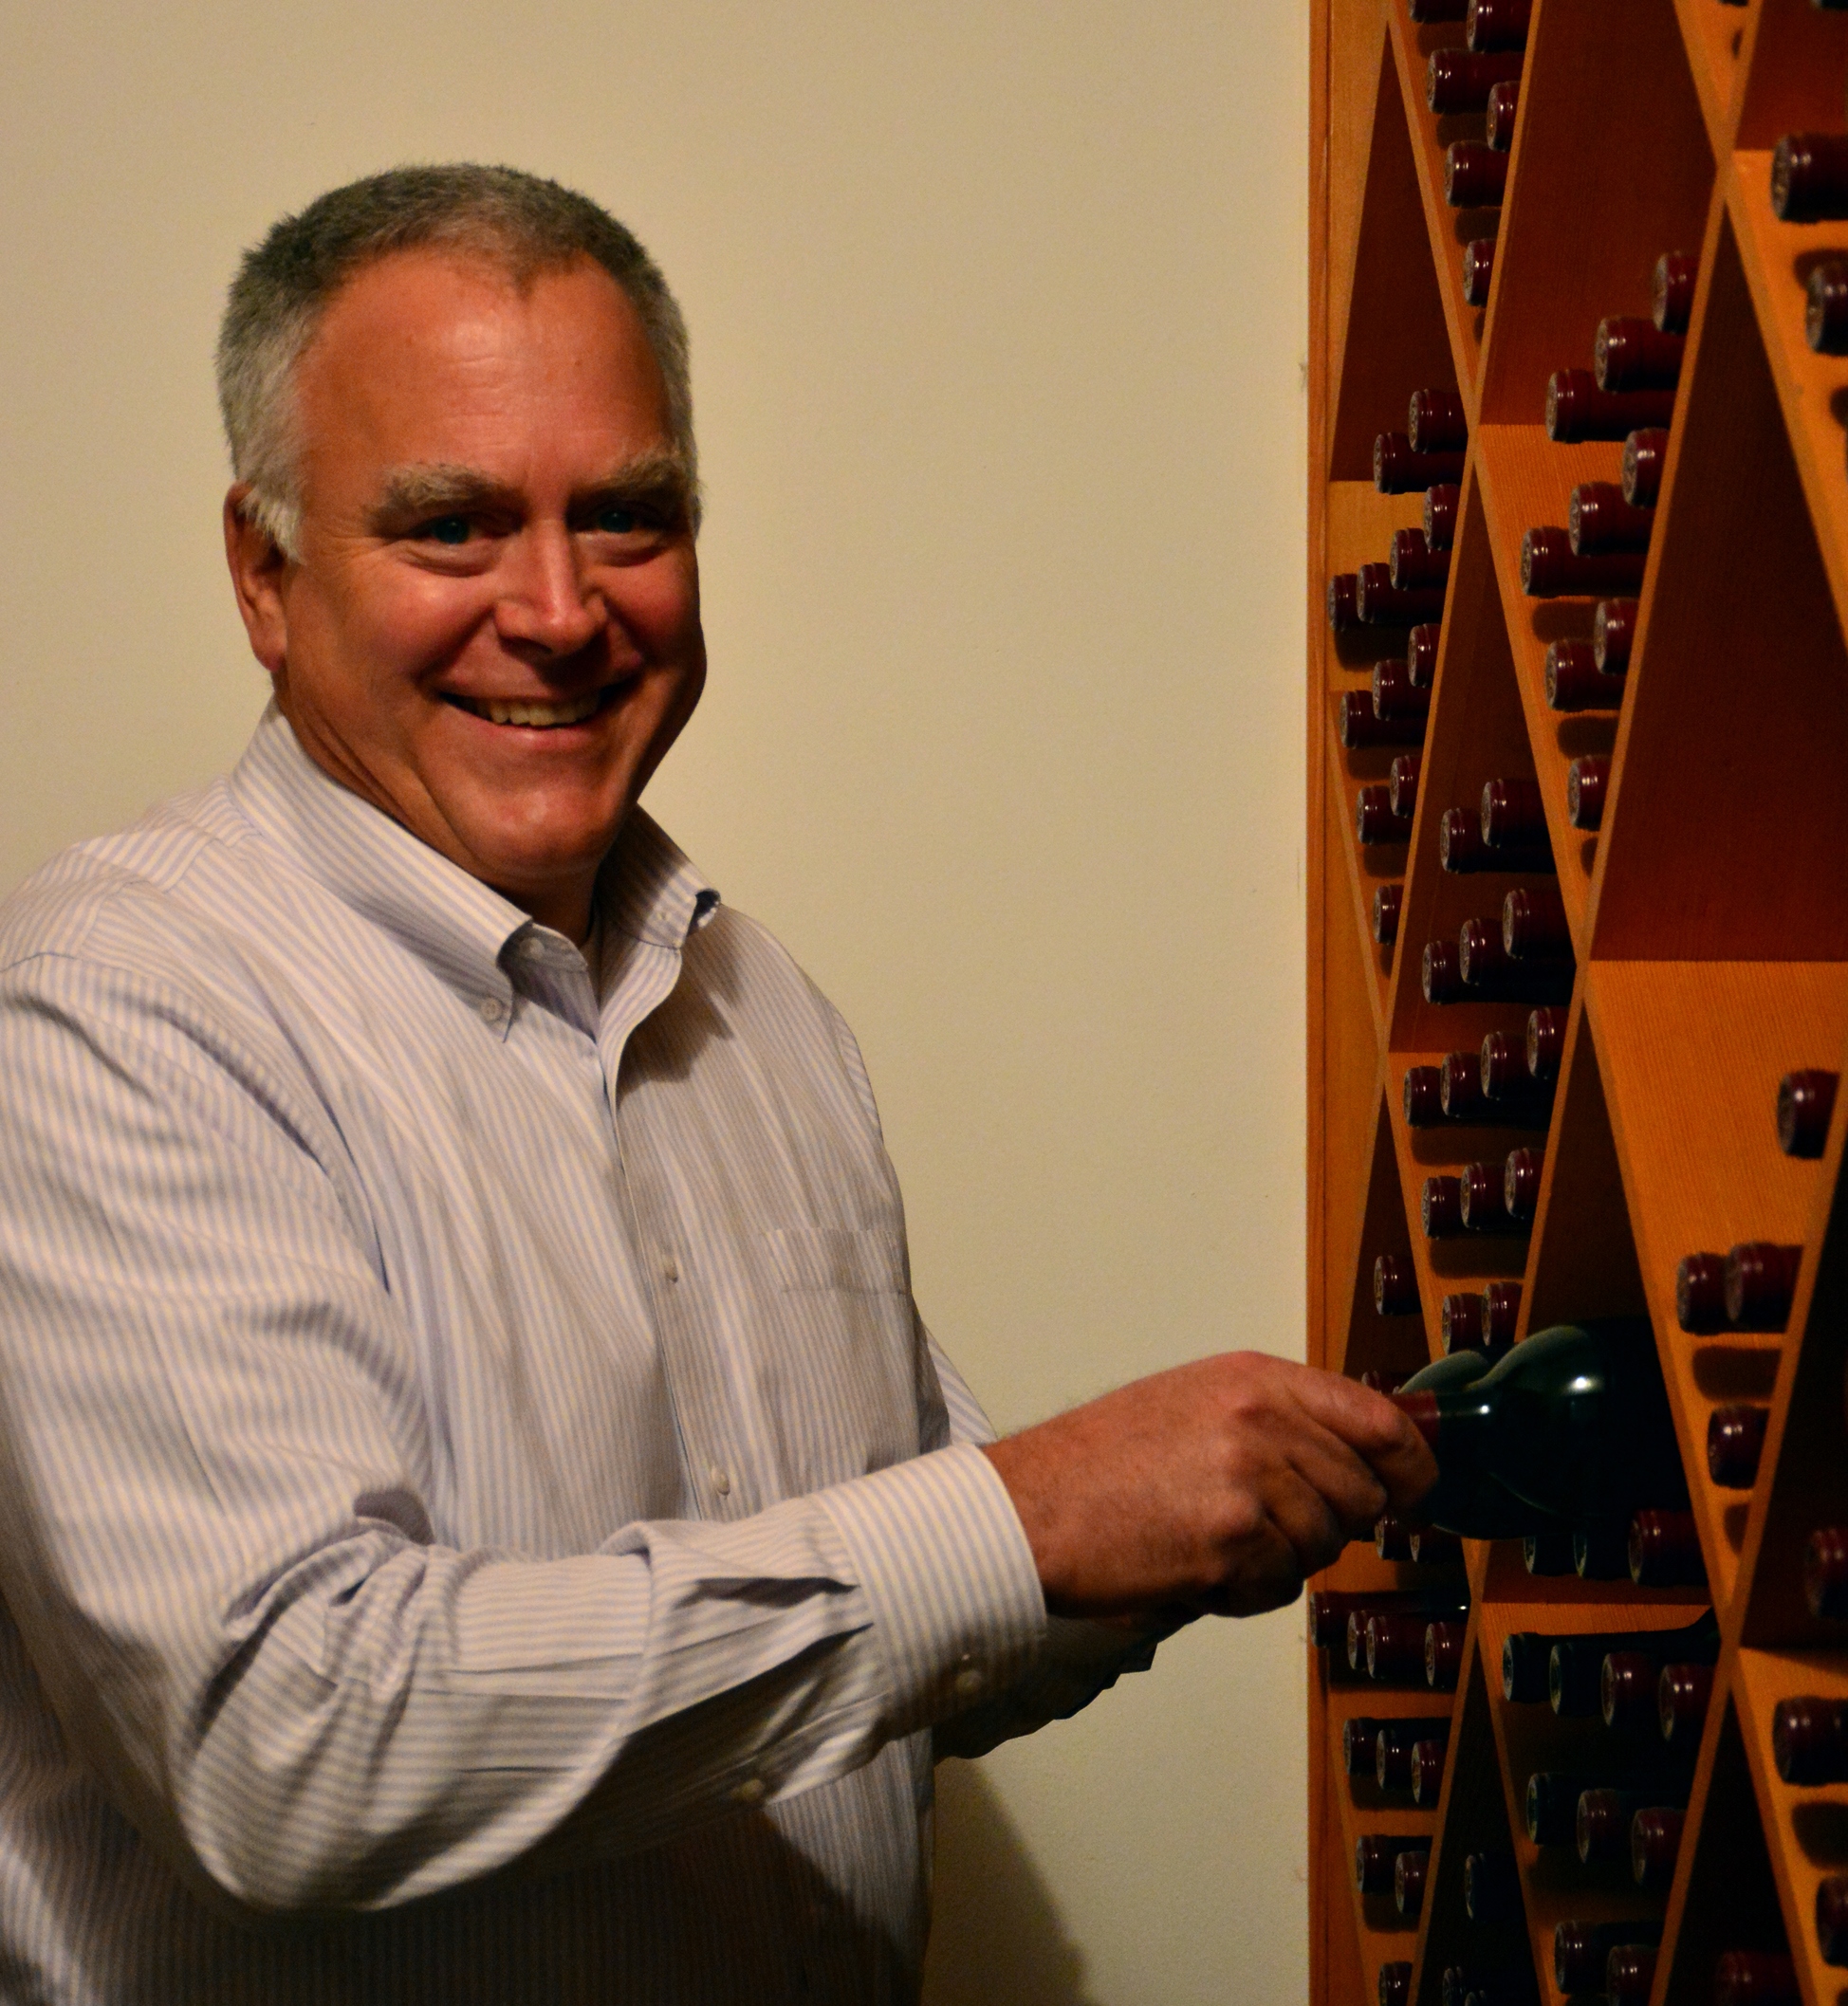 Scott Hafner organizes his wine cellar for the holidays.